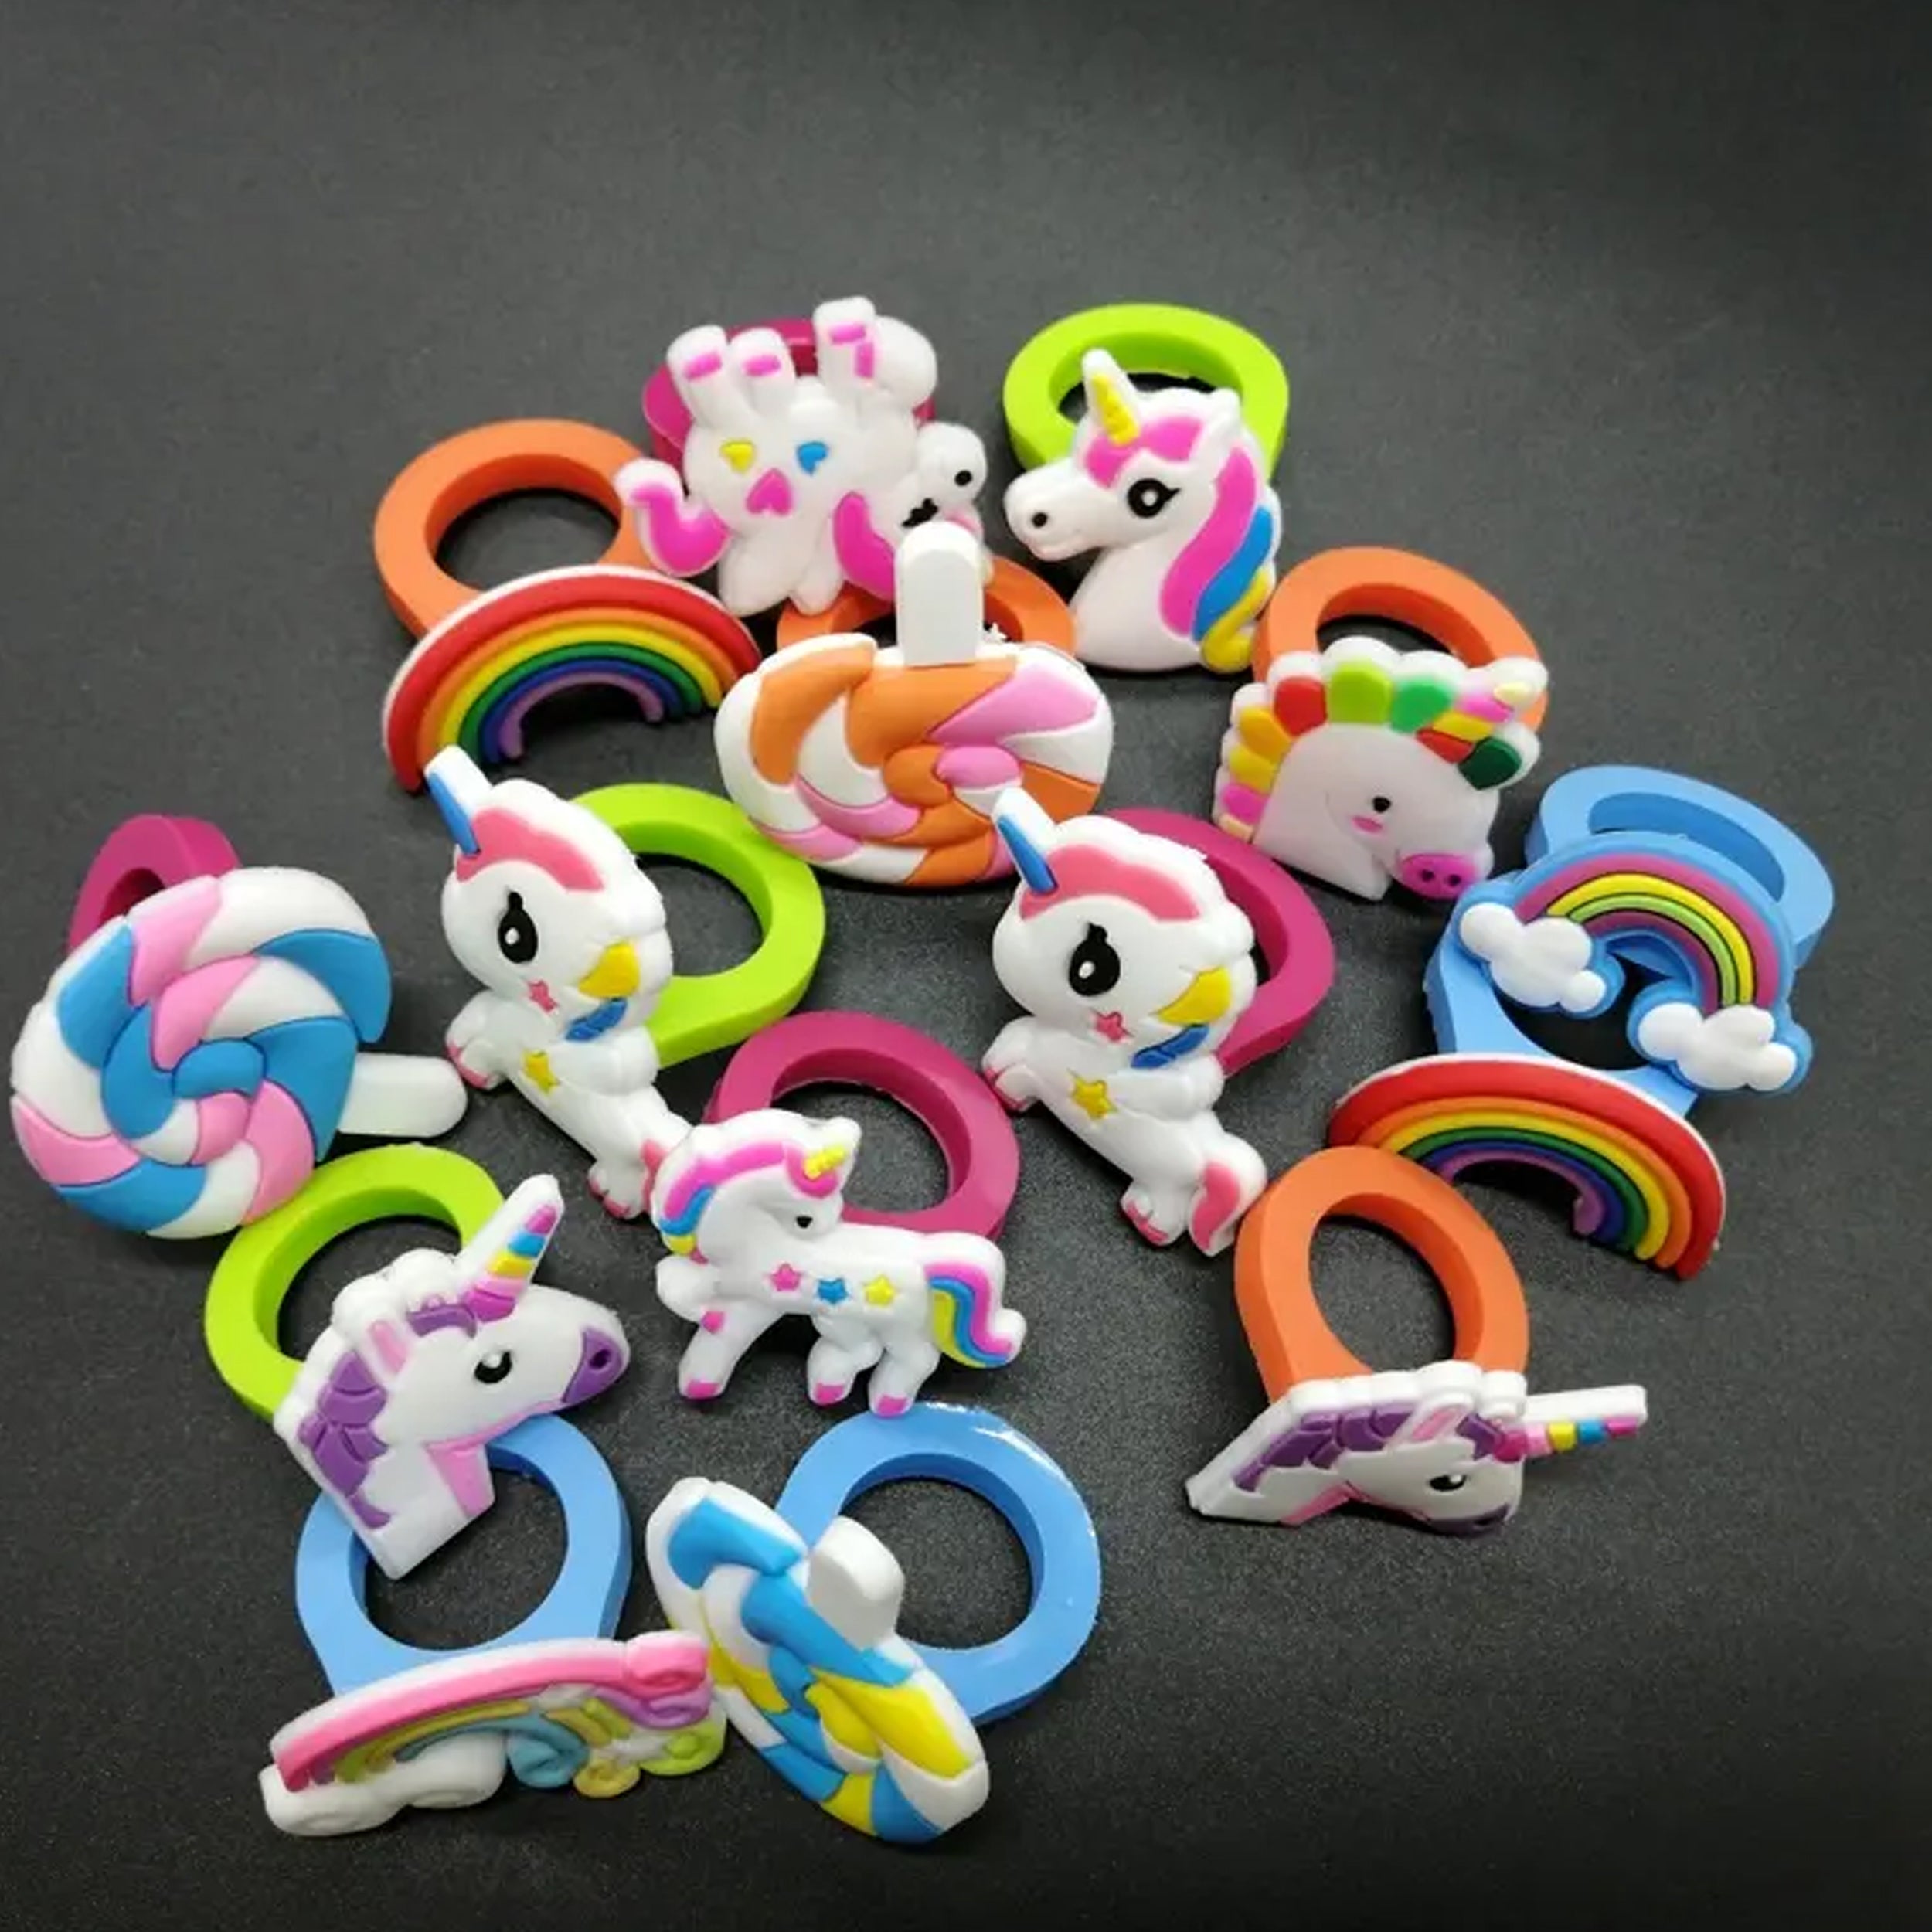 ArtCreativity Plastic Jewel Princess Rings for Kids - 144 Pack - Colorful  Birthd | eBay